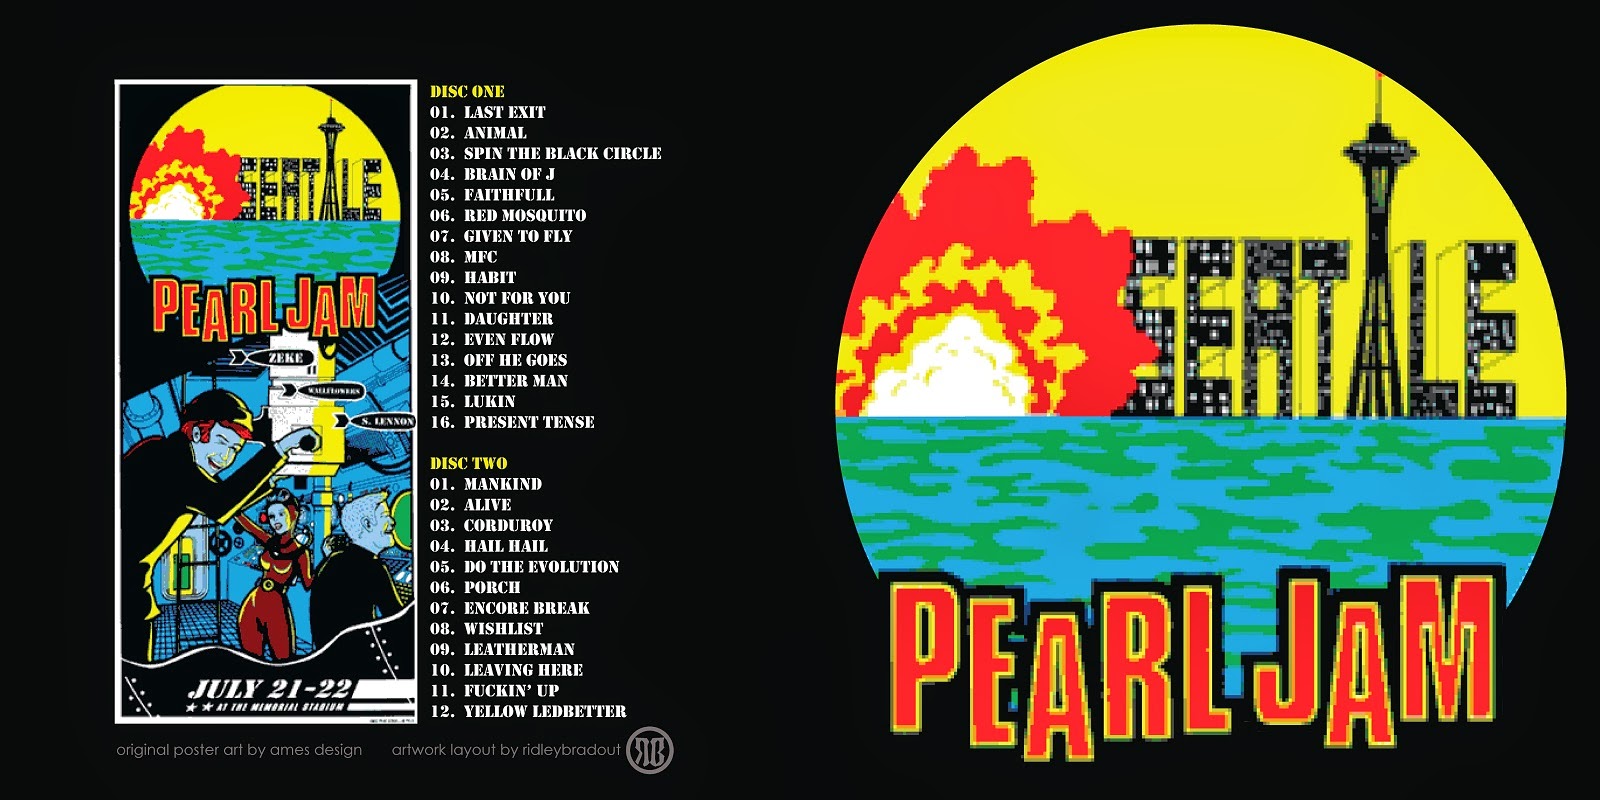 Download Pearl Jam Discography torrent - BTScene Torrents